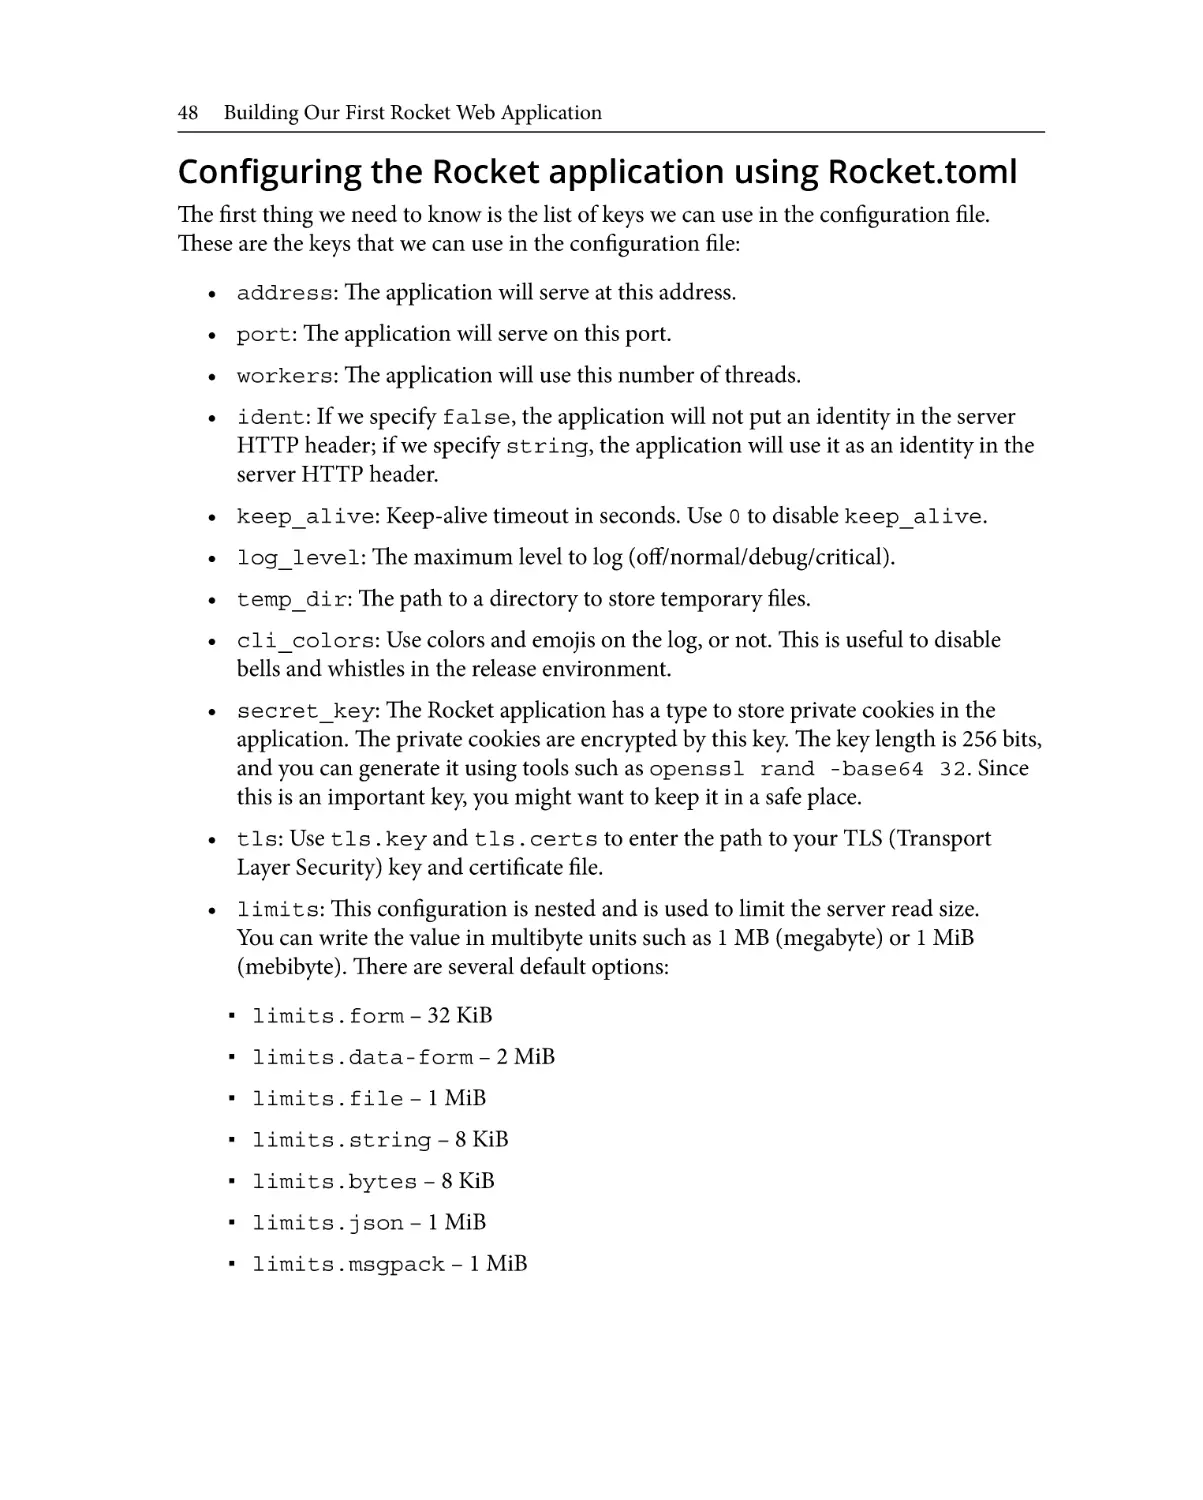 Configuring the Rocket application using Rocket.toml